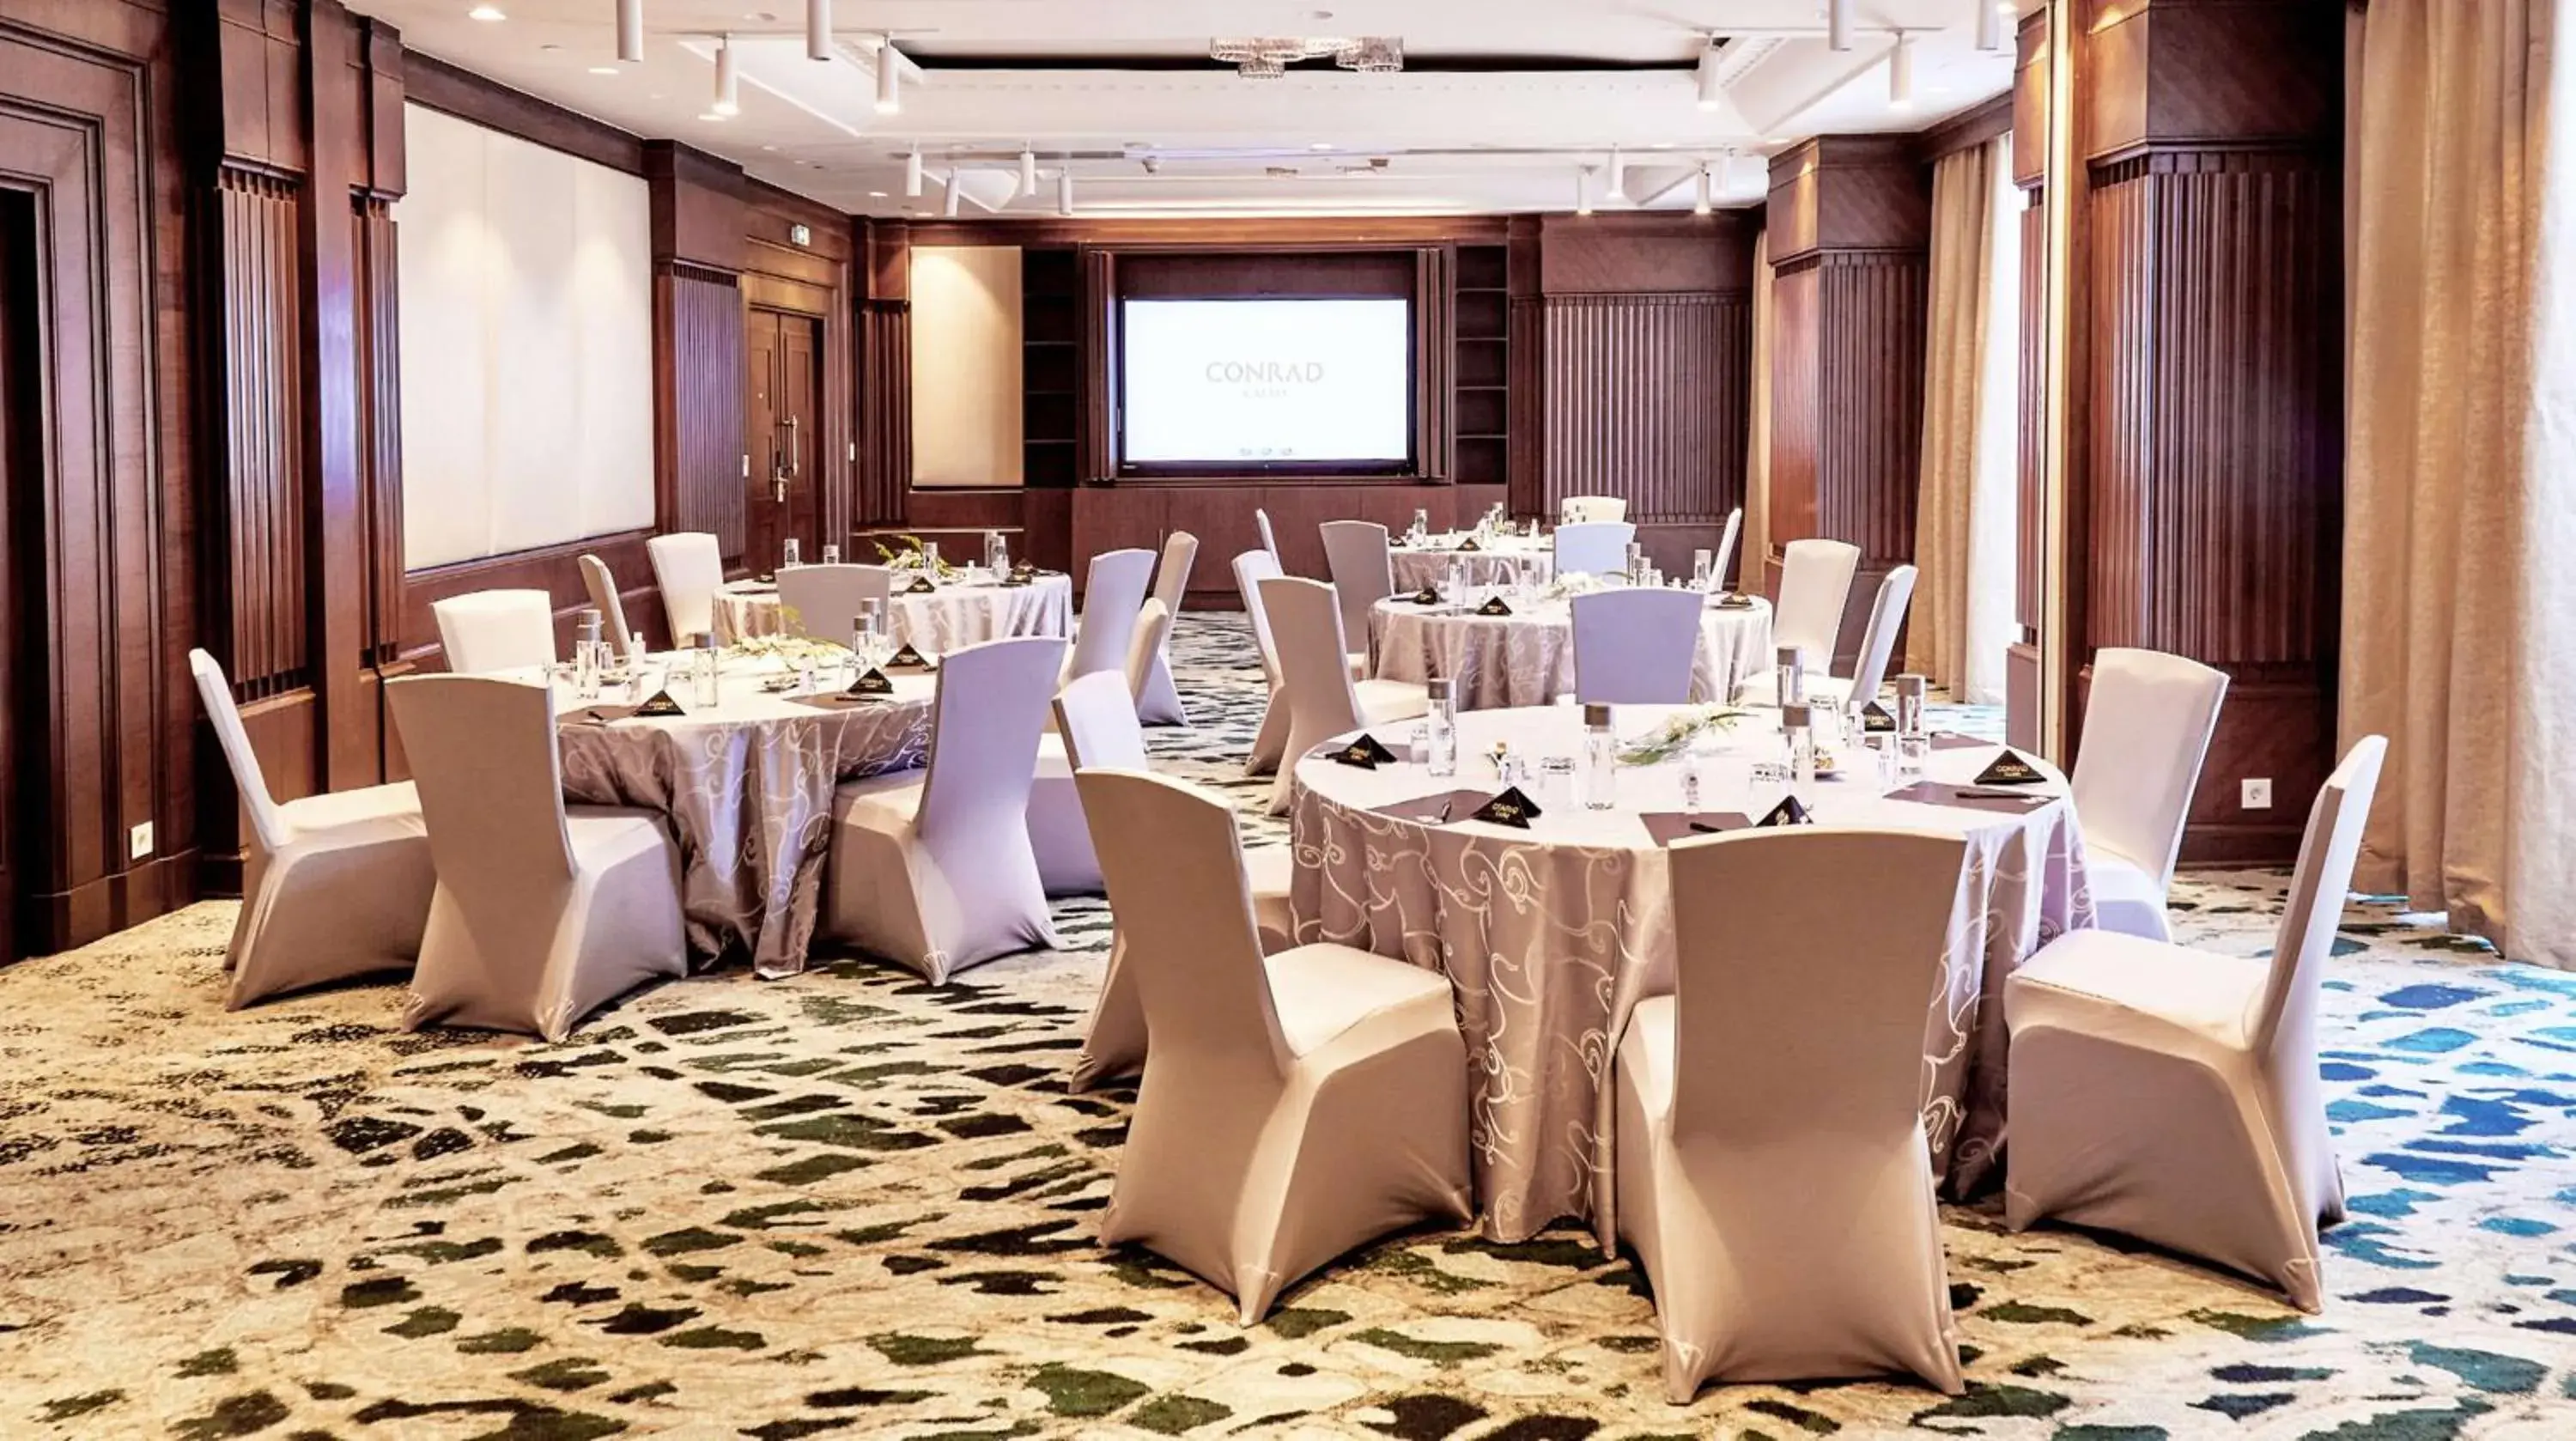 Meeting/conference room, Banquet Facilities in Conrad Cairo Hotel & Casino